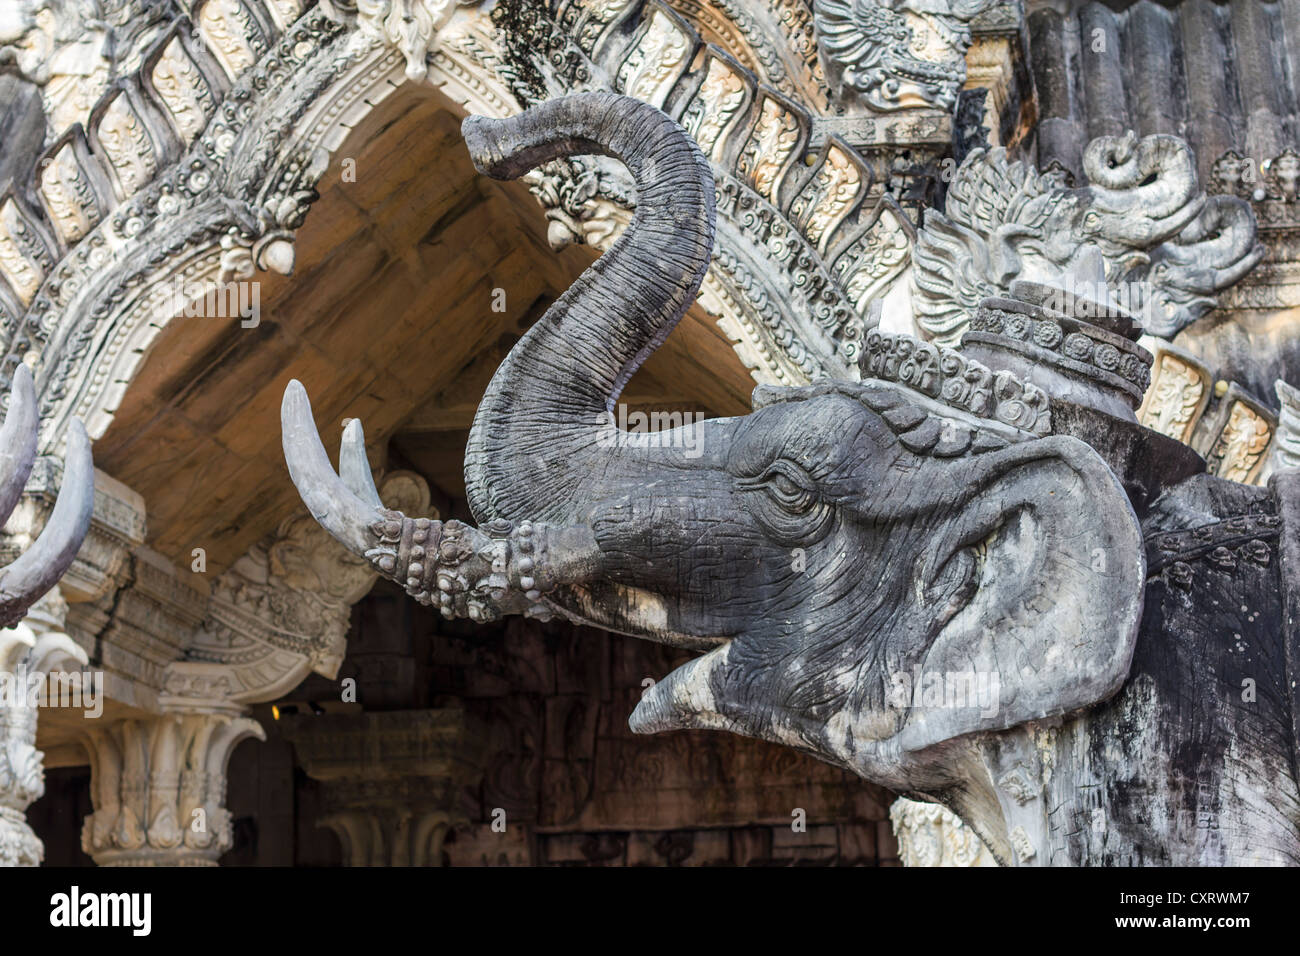 Elephant head, trunk and tusks statue at Fantasea amusement park, Phuket, Thailand. Stock Photo